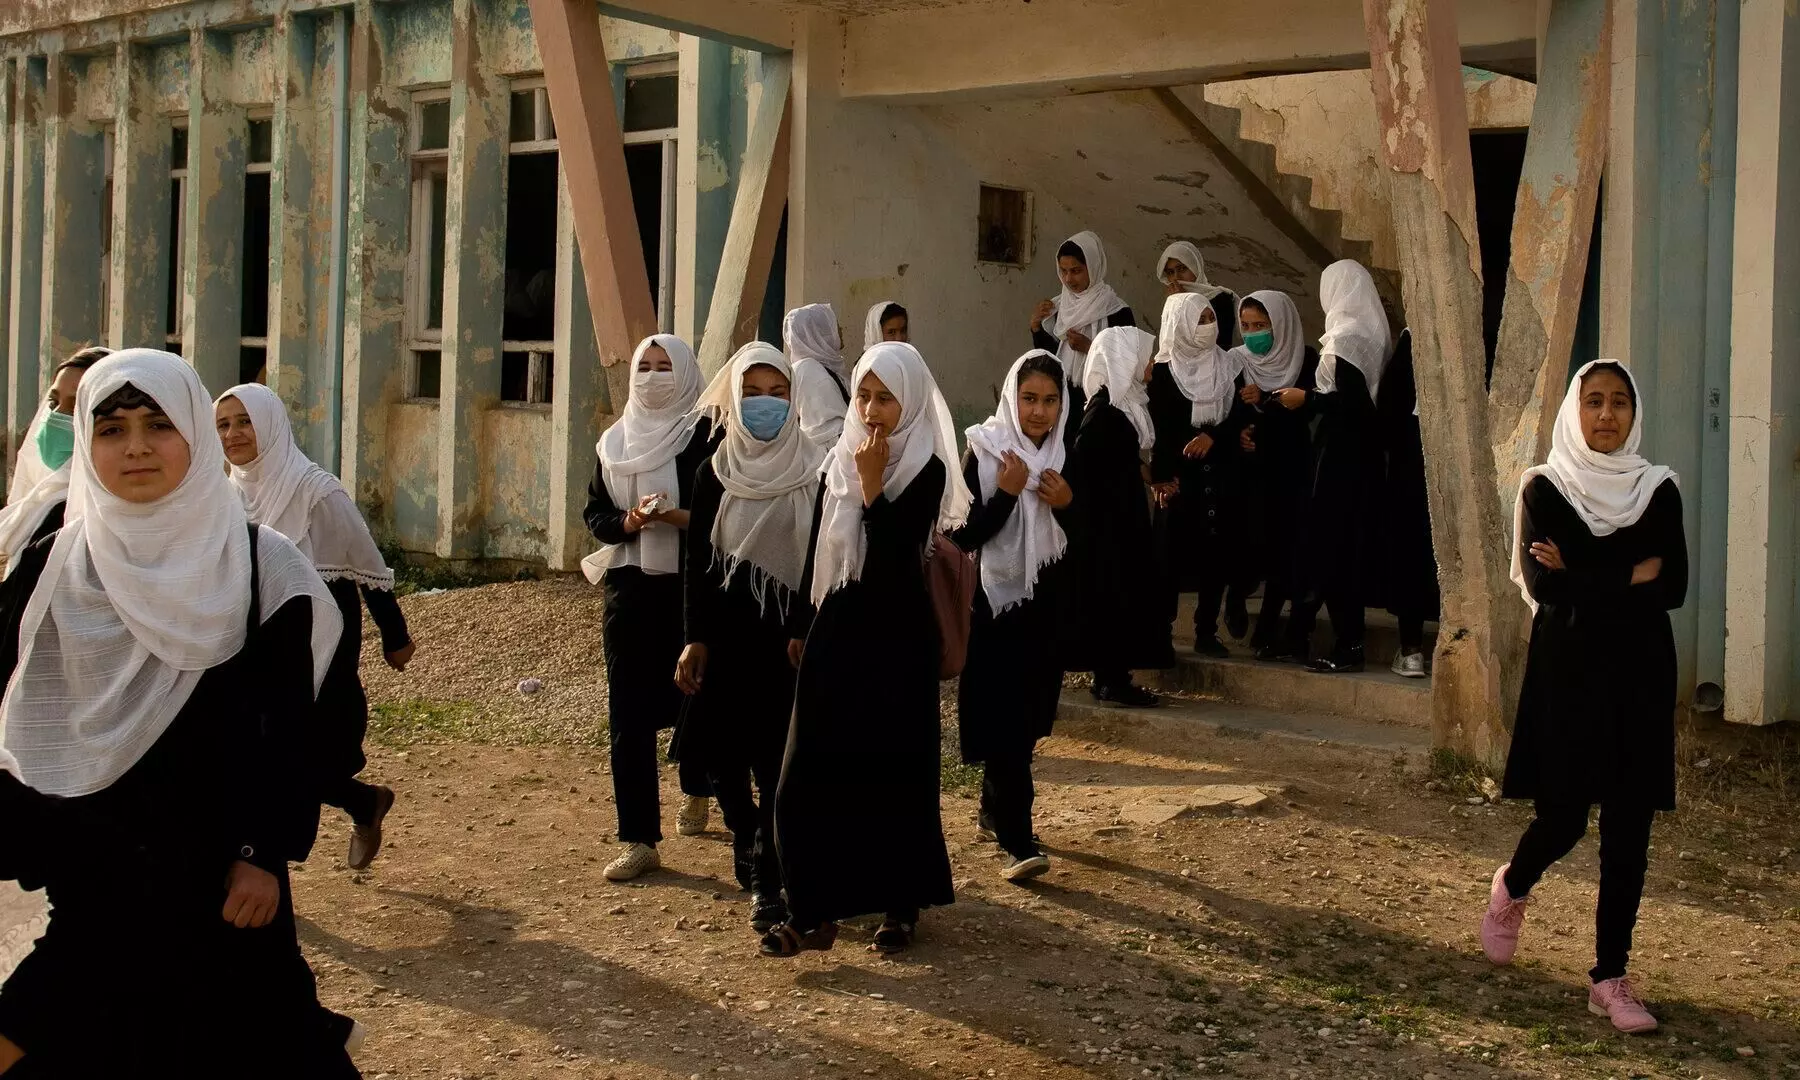 Talibans U-turn shutting schools on teenage girls shocks many